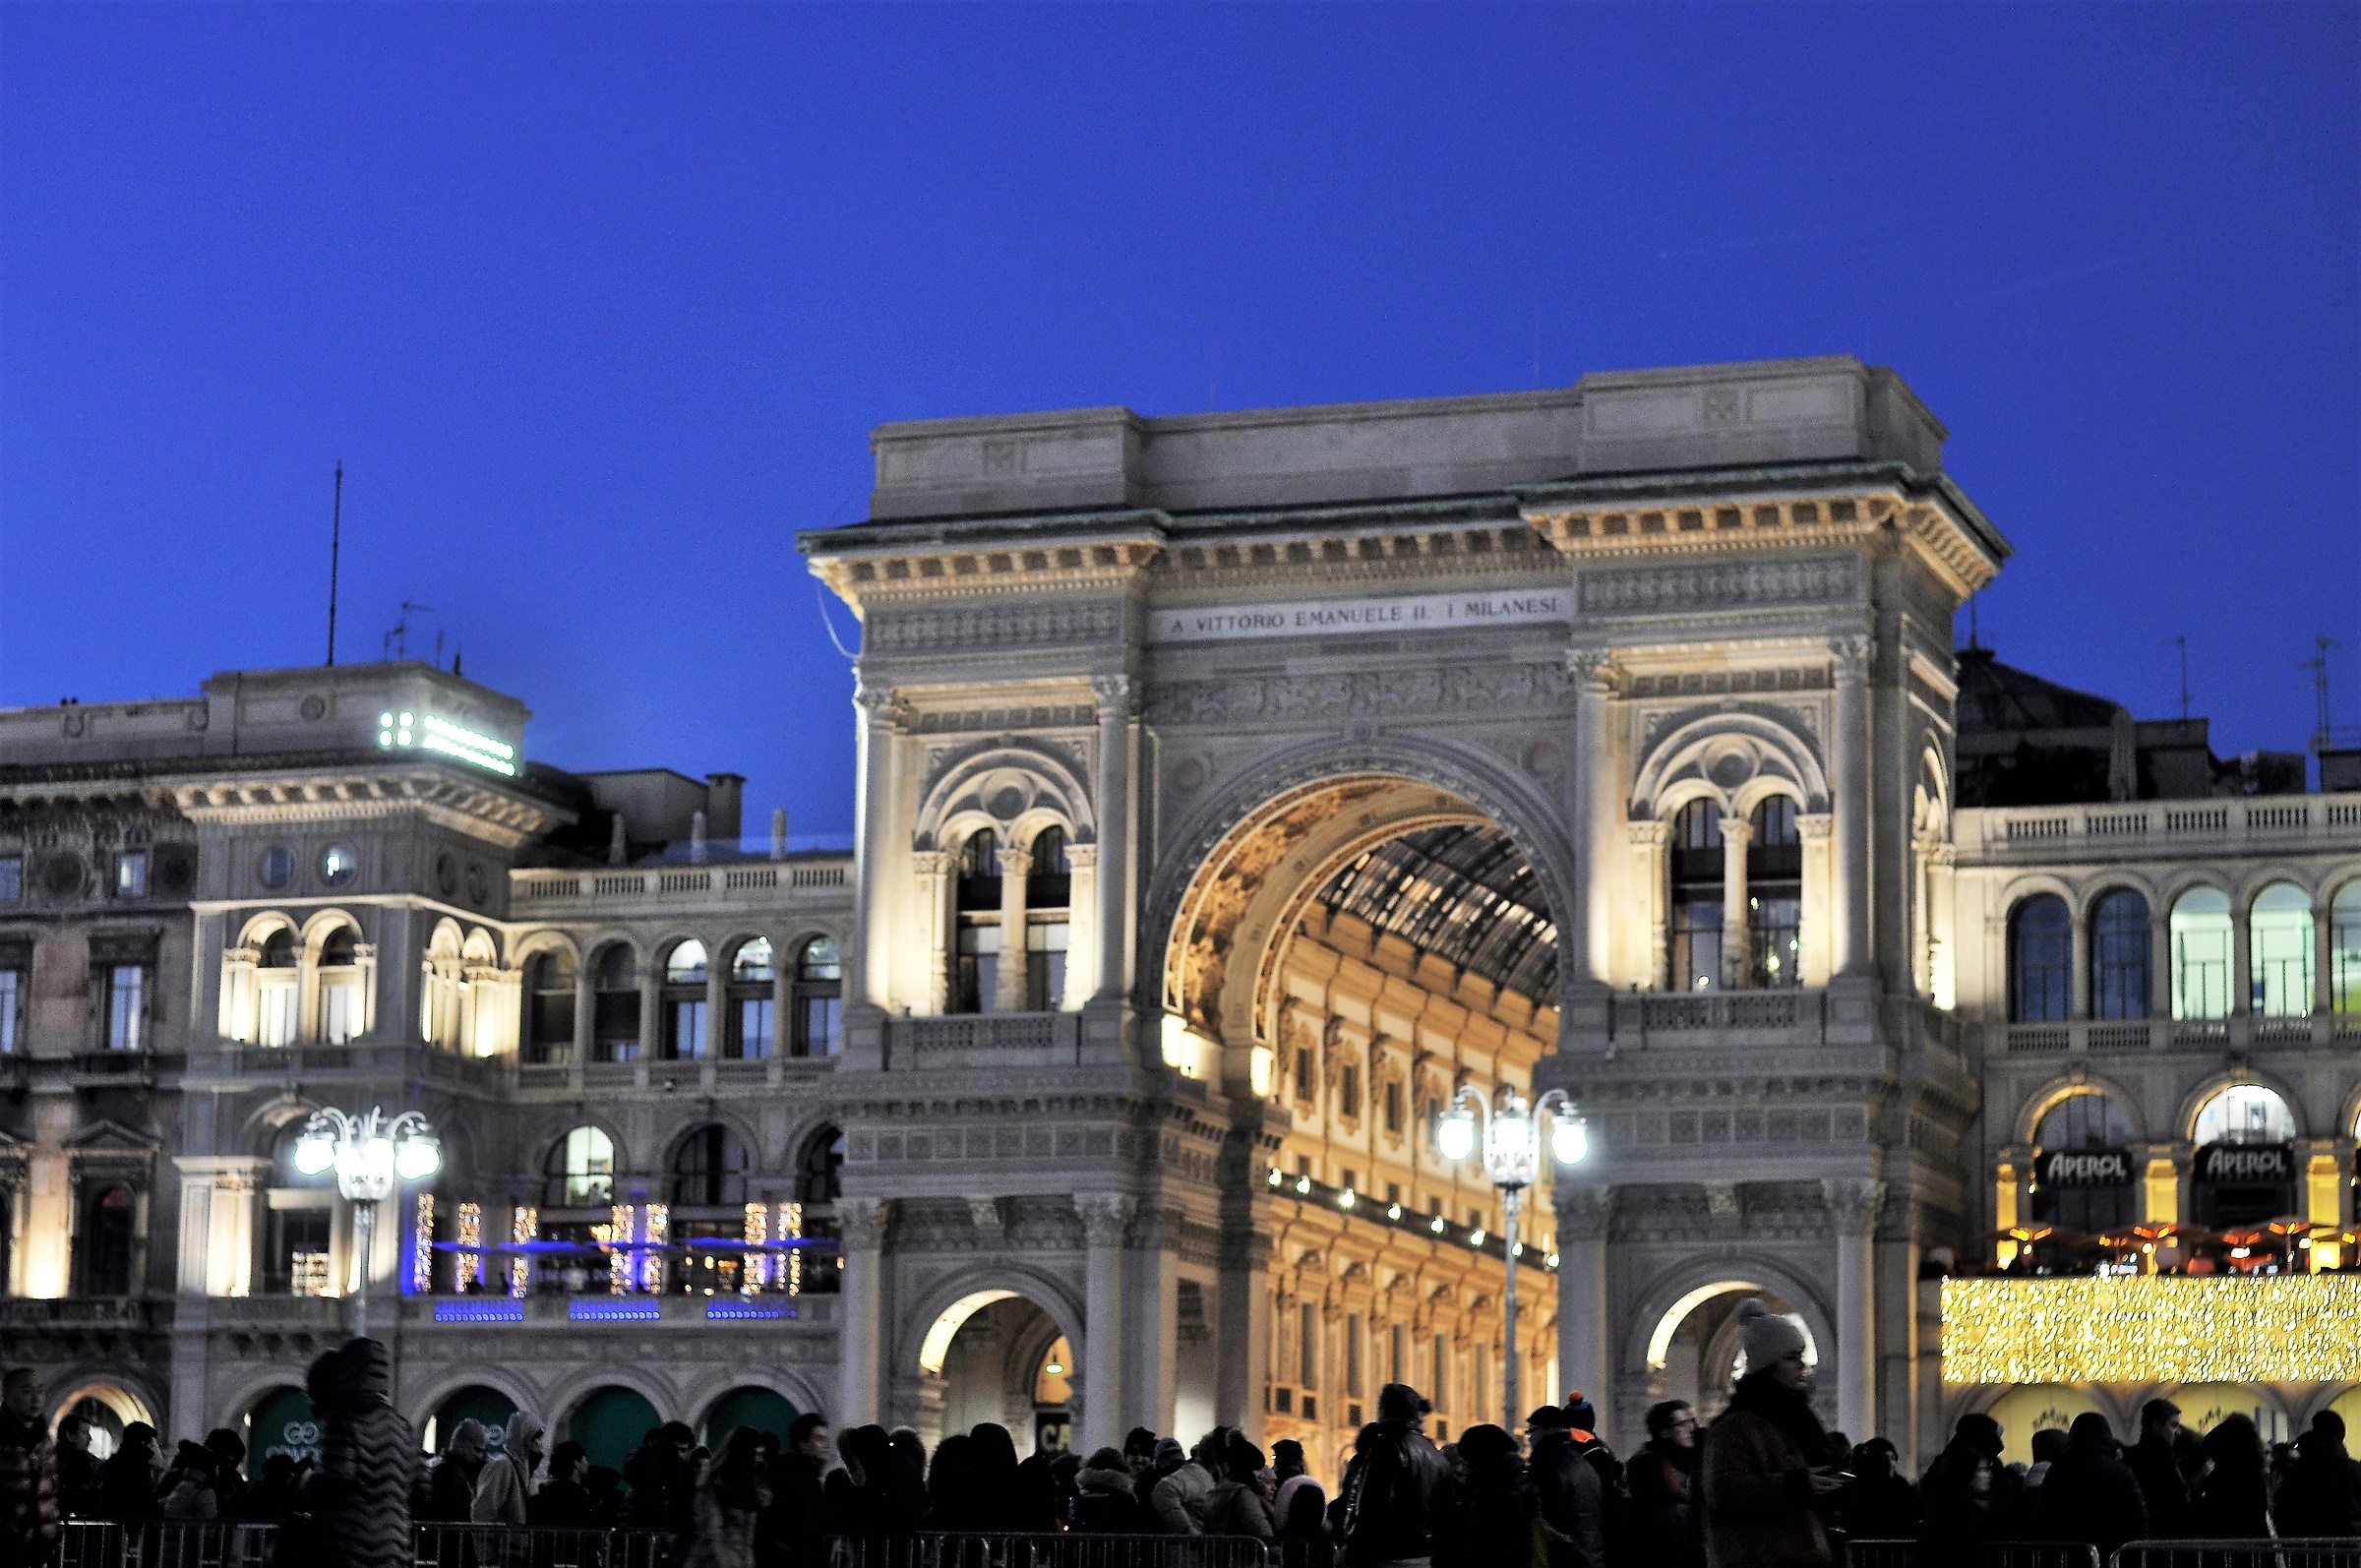 Piazza del Duomo by night...